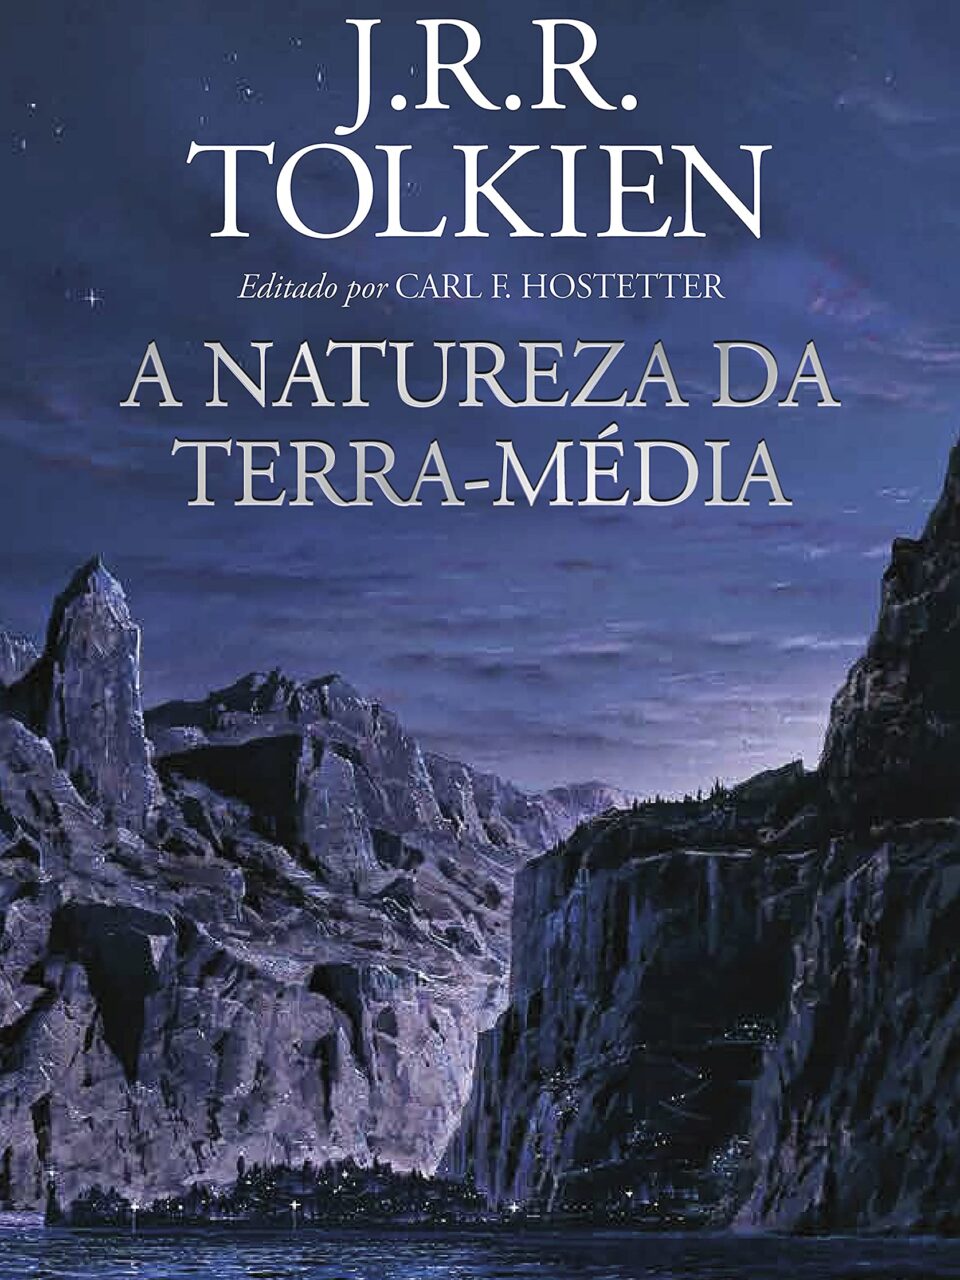 A Natureza da Terra-média – J. R. R. Tolkien